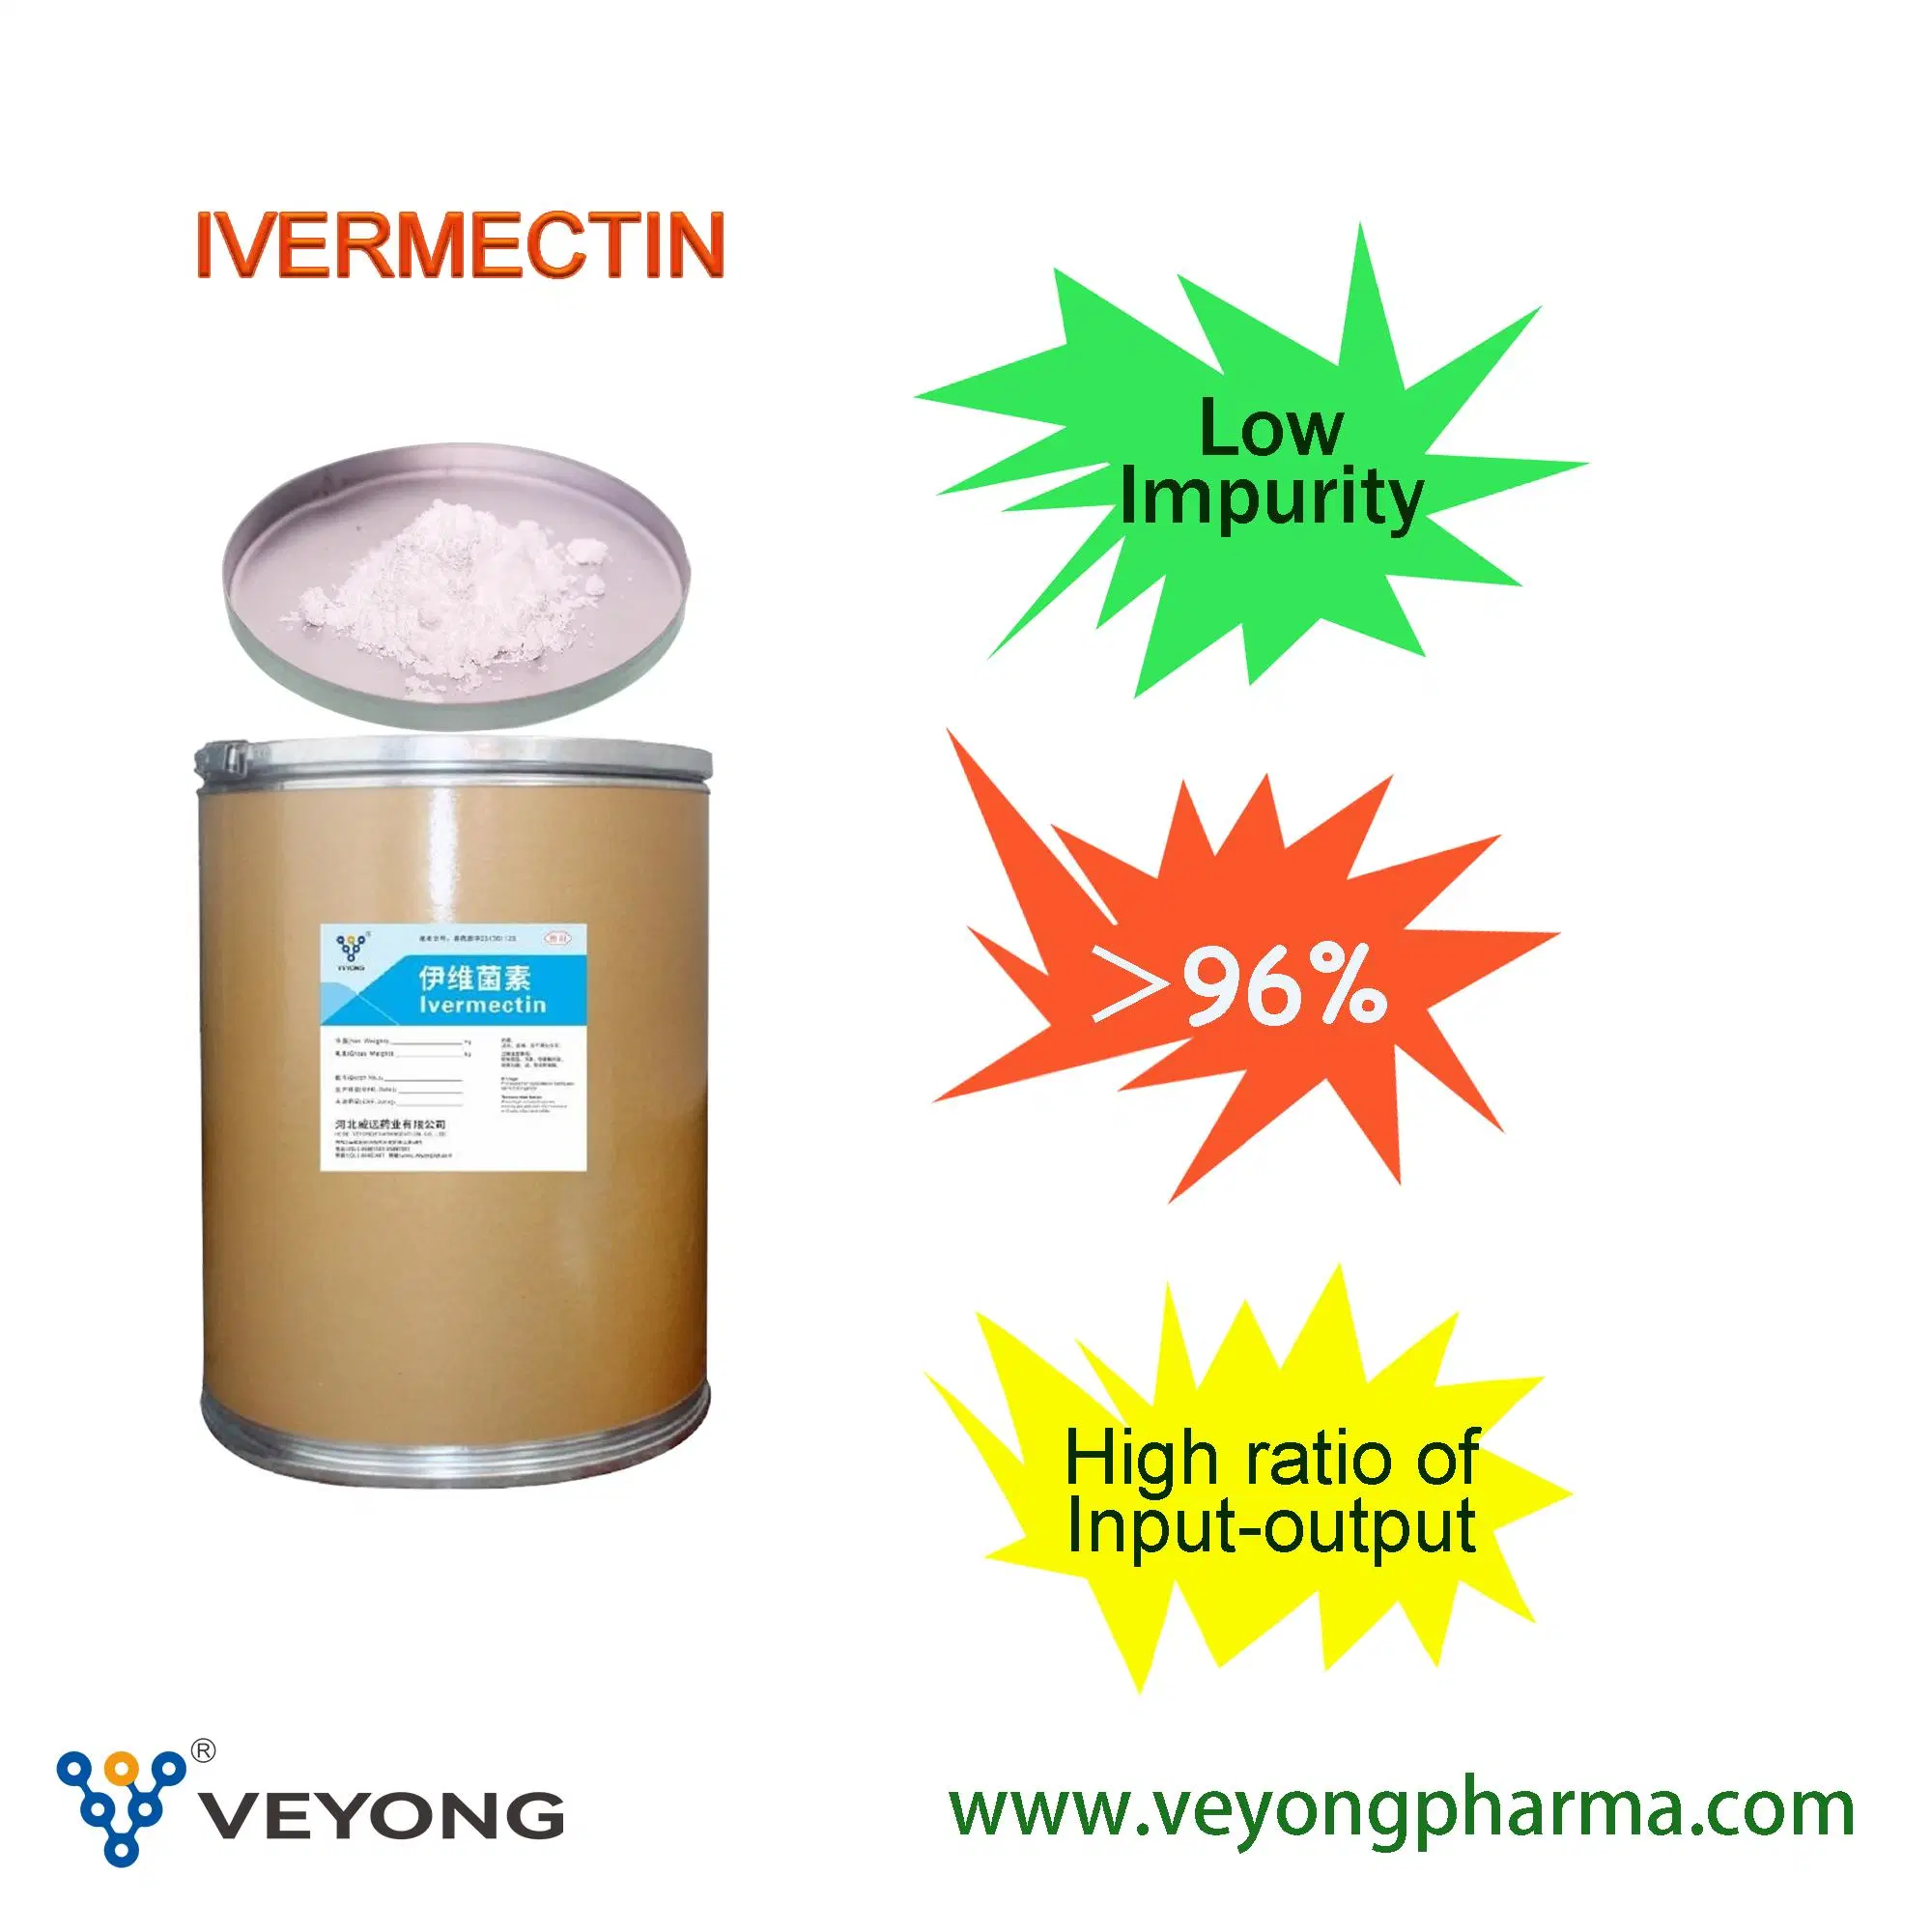 Veterinary Drug Raw Material Avermectin Powder CAS 71751-41-2 Avermectin